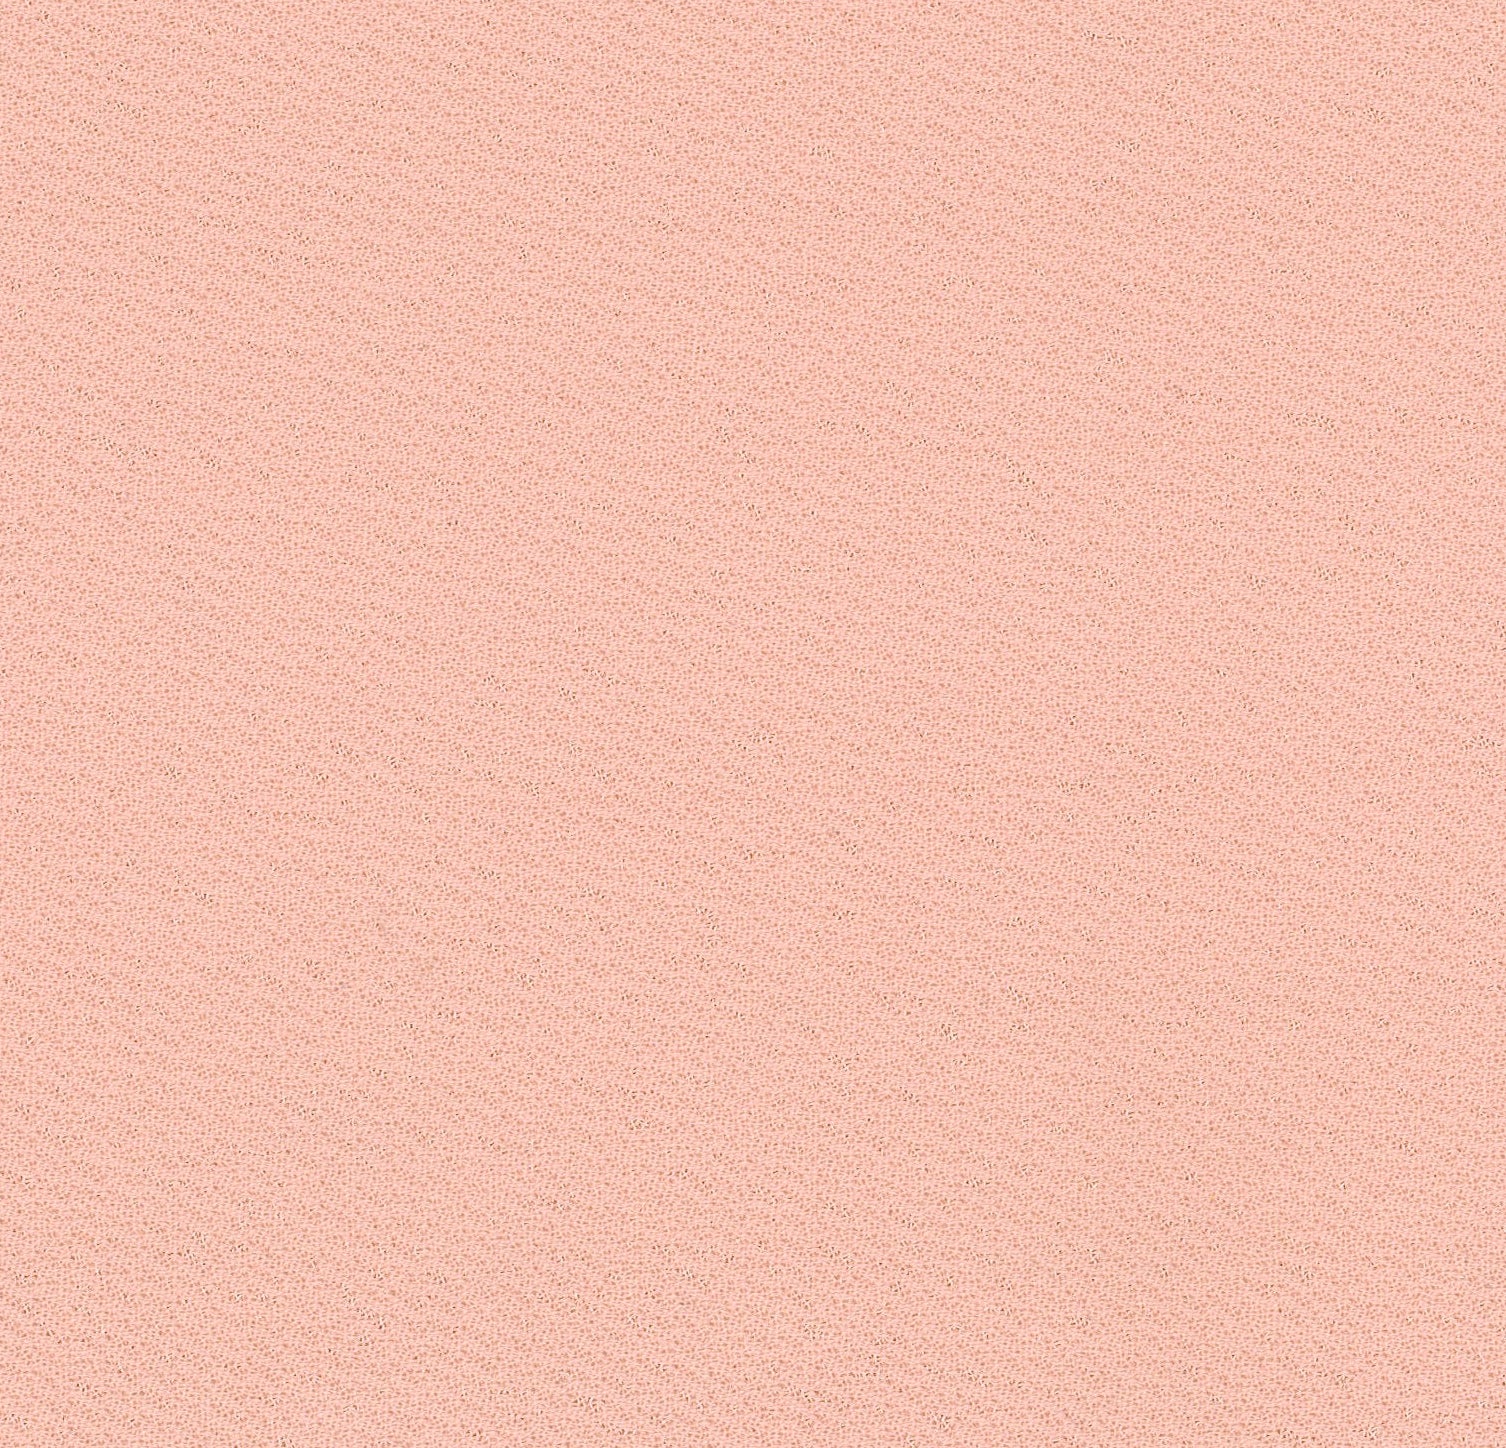 35005-11 Powder Pink Polyester Plain Dyed 280g/yd 54" pink plain dyed polyester woven Solid Color - knit fabric - woven fabric - fabric company - fabric wholesale - fabric b2b - fabric factory - high quality fabric - hong kong fabric - fabric hk - acetate fabric - cotton fabric - linen fabric - metallic fabric - nylon fabric - polyester fabric - spandex fabric - chun wing hing - cwh hk - fabric worldwide ship - 針織布 - 梳織布 - 布料公司- 布料批發 - 香港布料 - 秦榮興